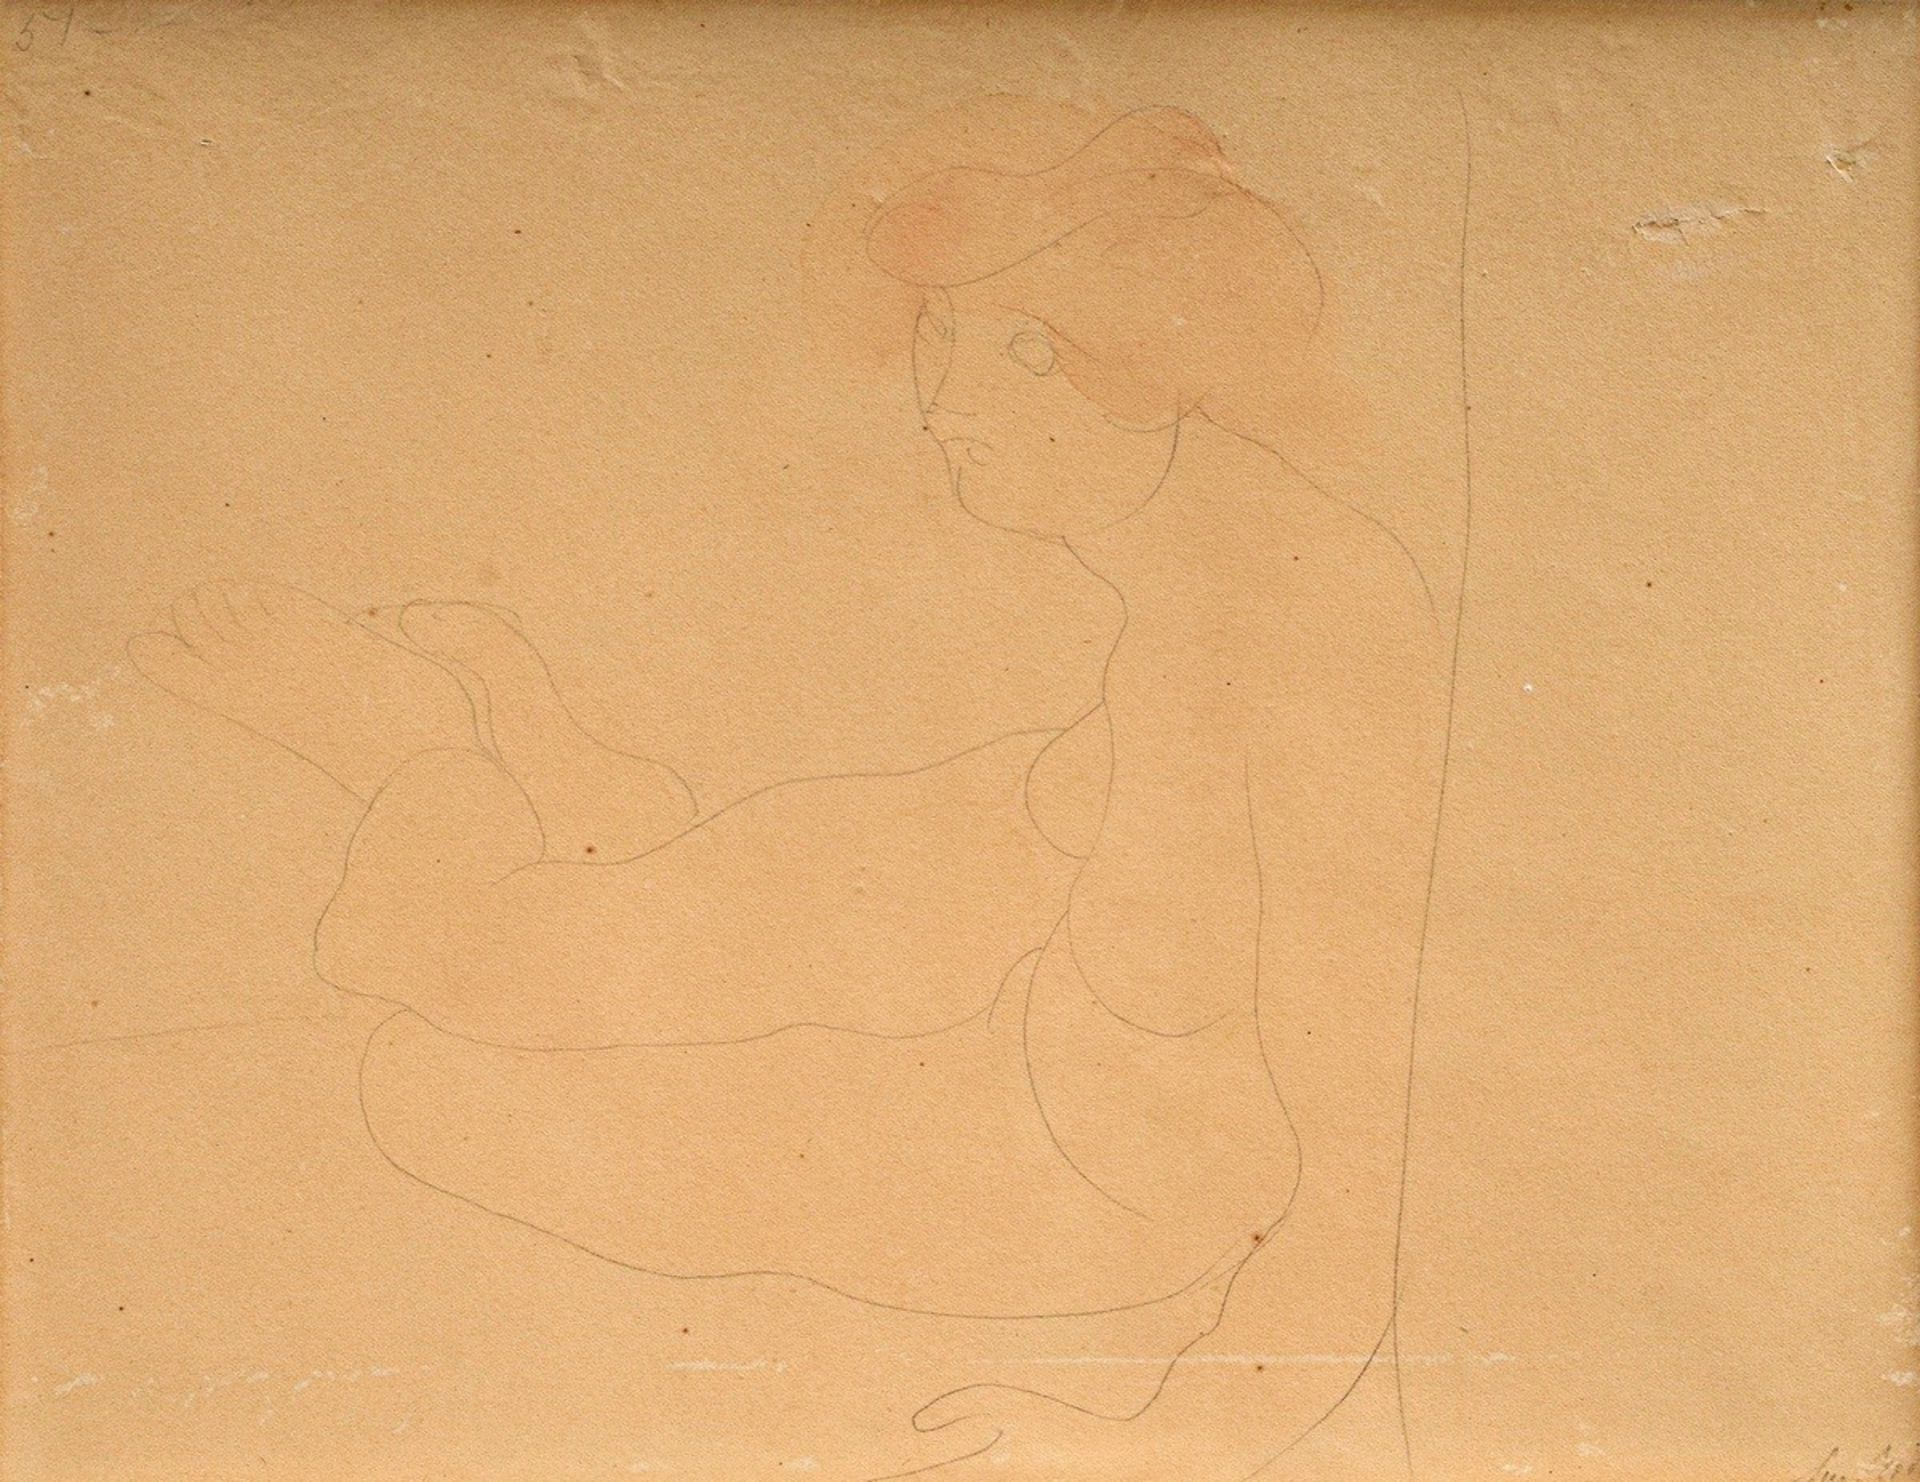 Rodin, Auguste (1840-1917) "Sitzender Akt", Blei | Rodin, Auguste (1840-1917) "Sitting Nude", penci